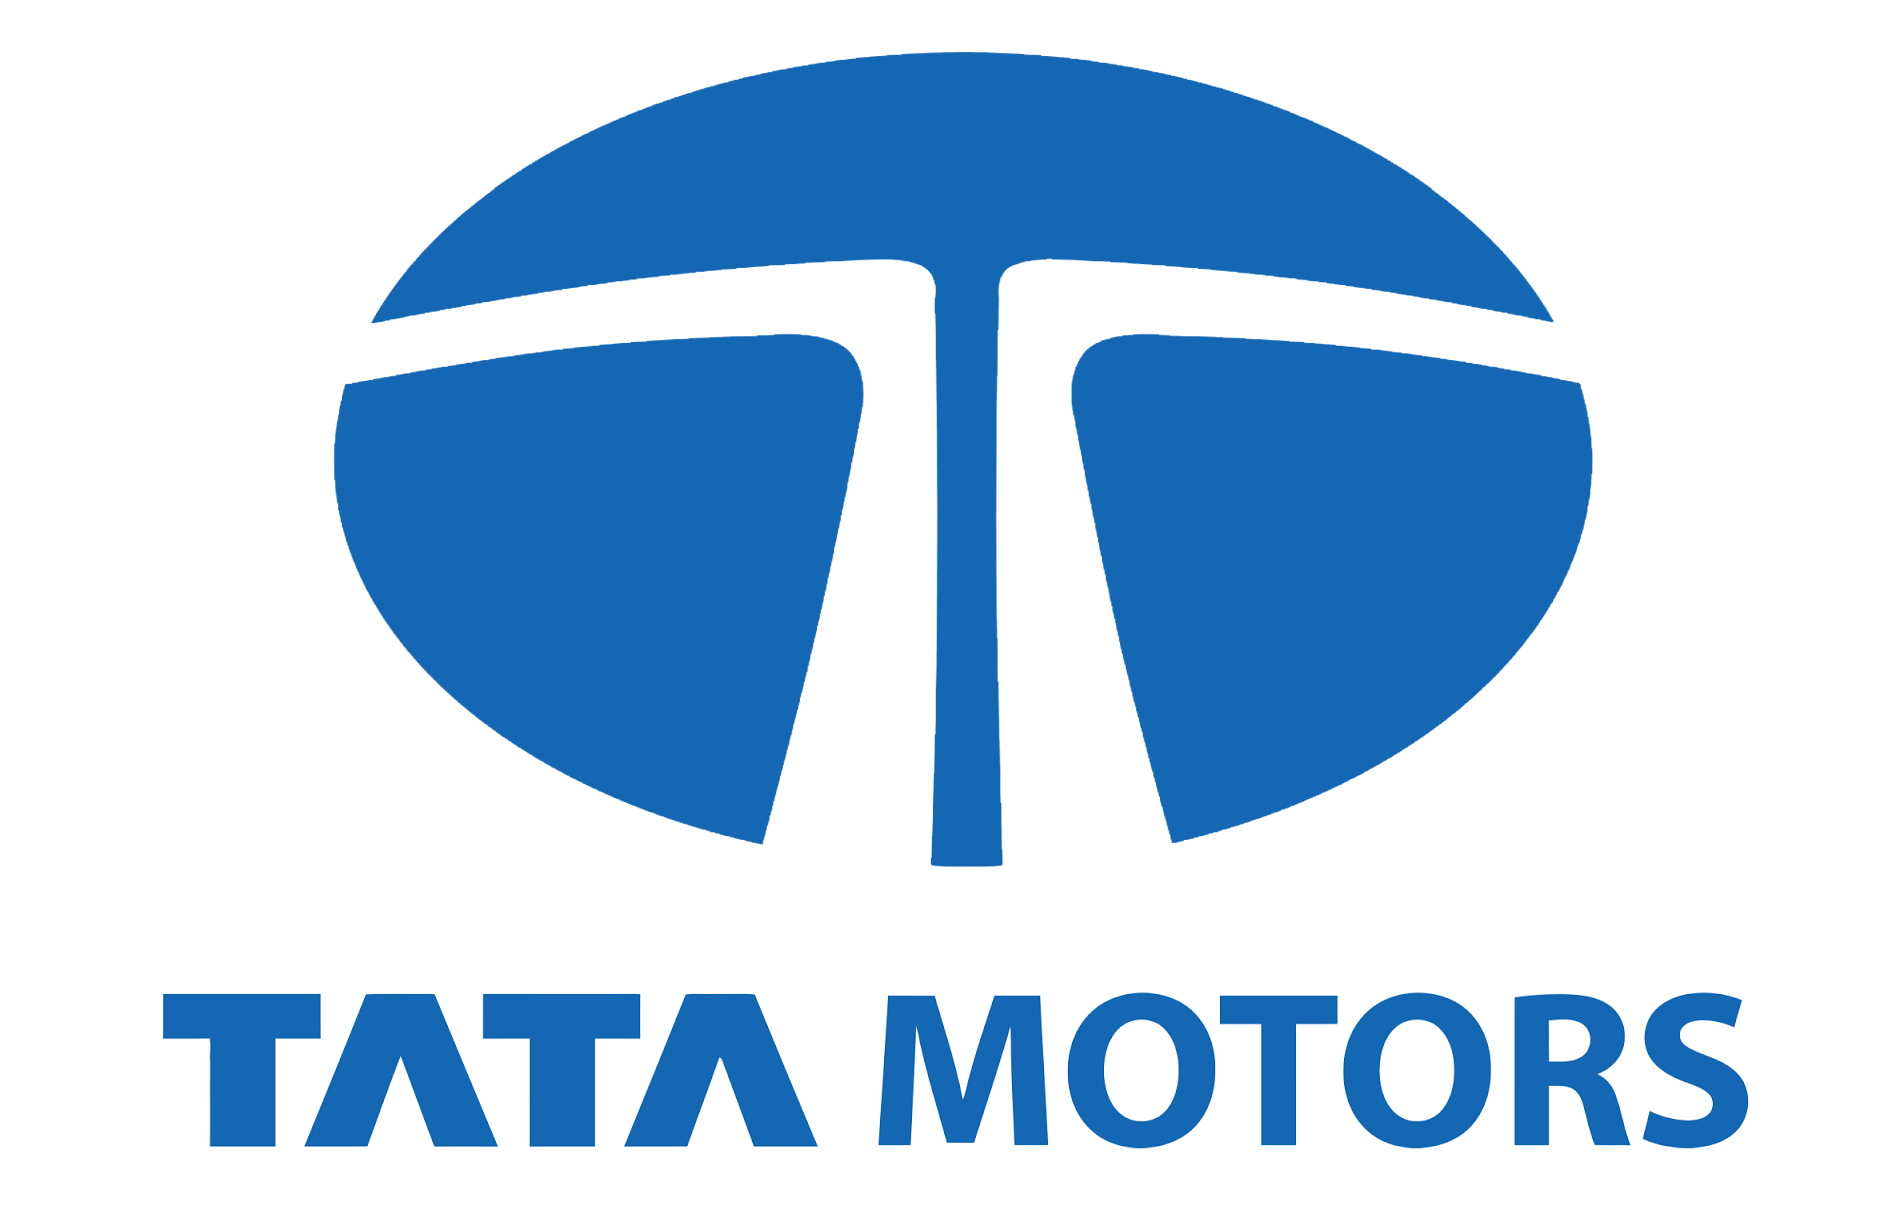 Tata Motors Cars Showroom - National Garage|Show Room|Automotive